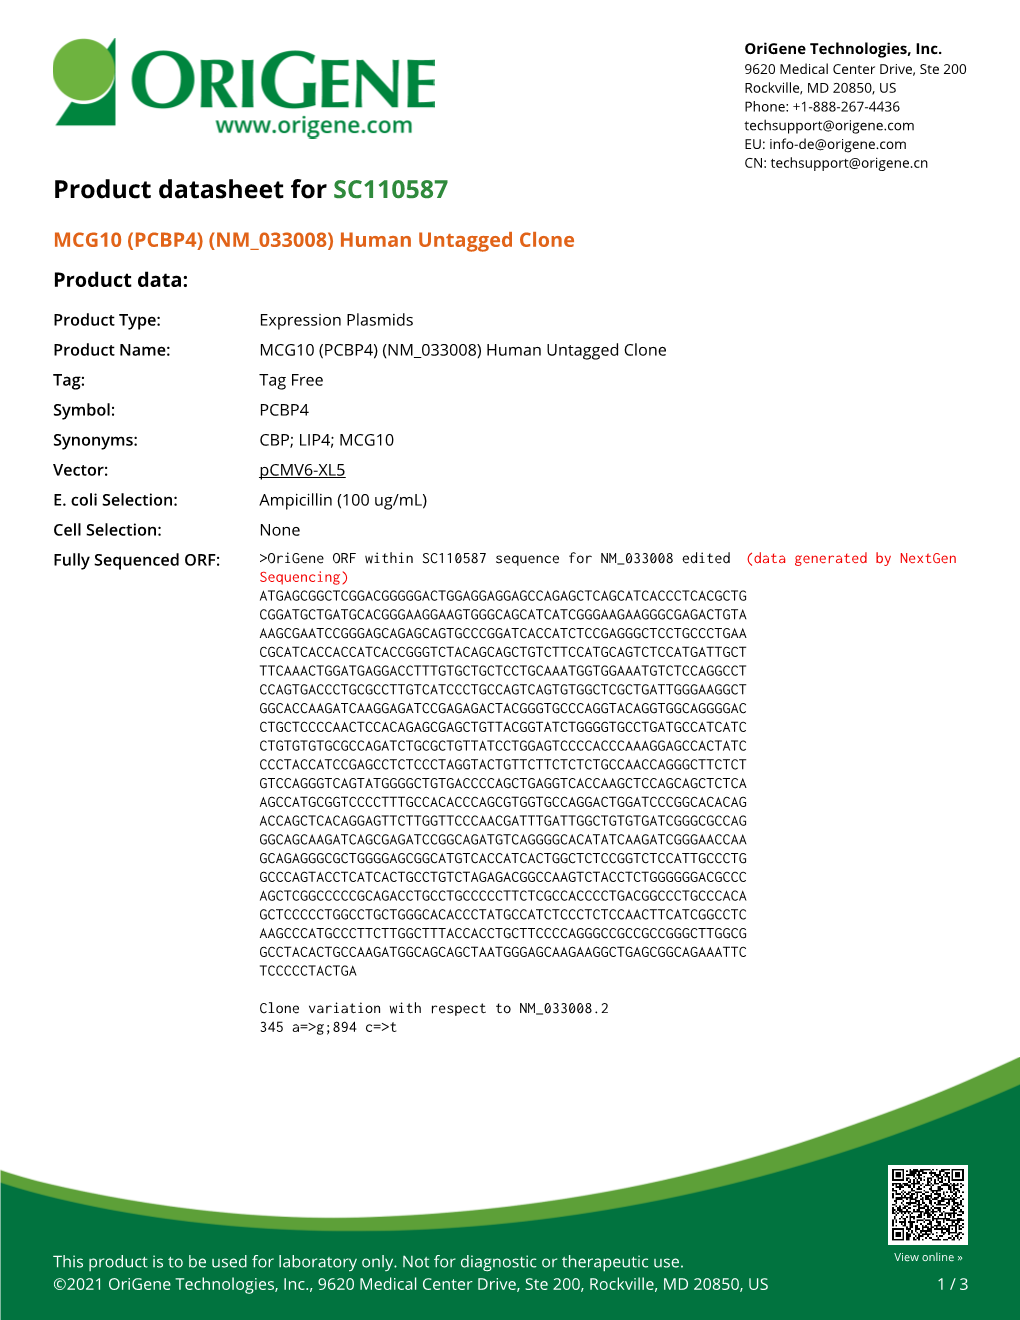 MCG10 (PCBP4) (NM 033008) Human Untagged Clone Product Data